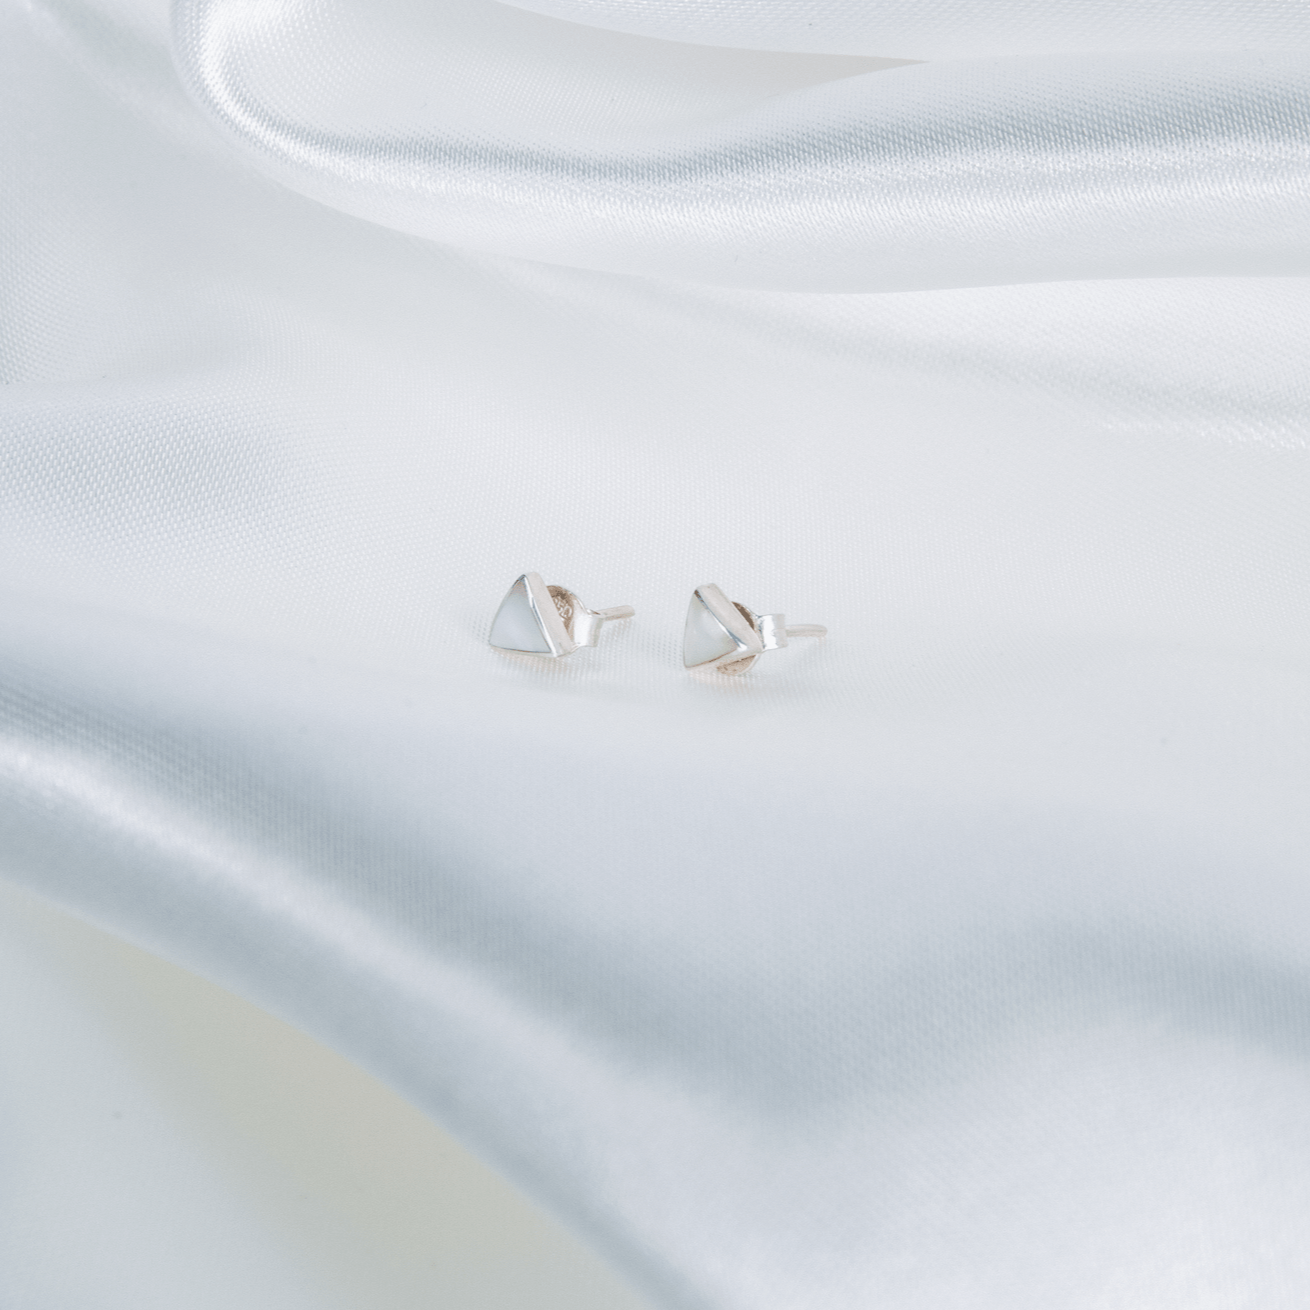 Triangular silver 950 stud earrings